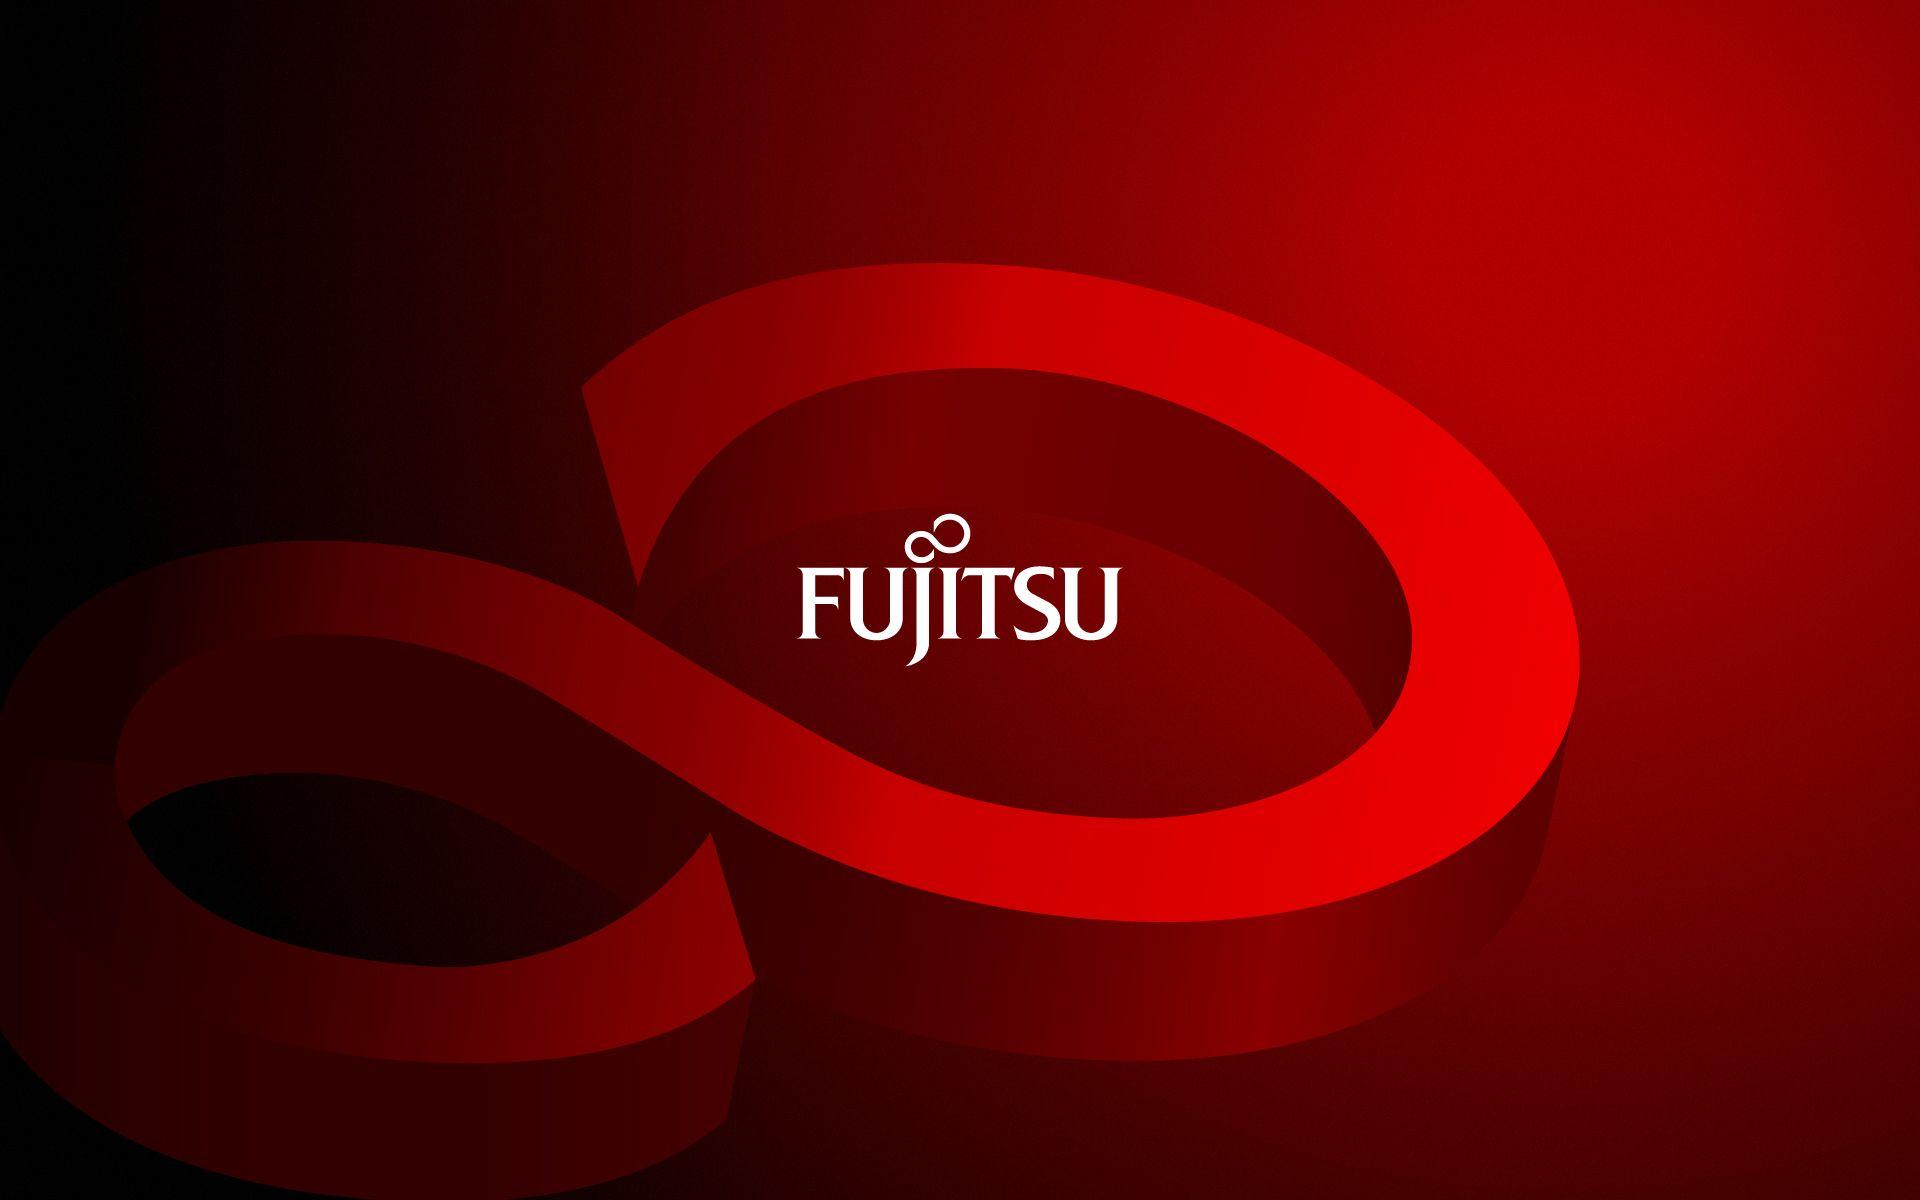 DDF:661 Wallpaper, Fujitsu HD Image Free Large Image